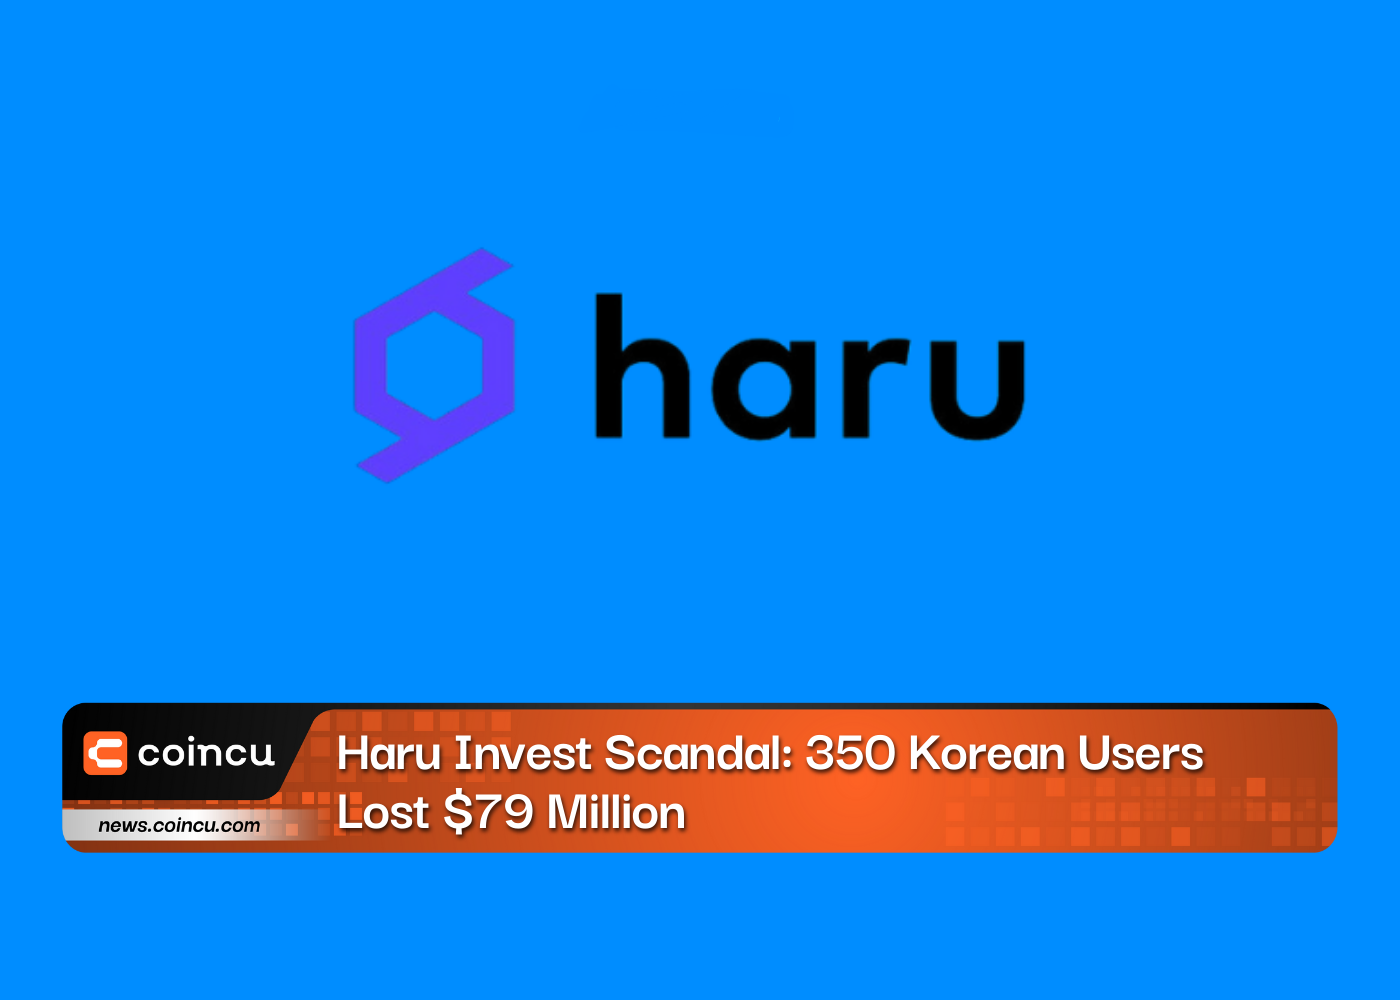 Haru Invest Scandal: 350 Korean Users Lost $79 Million